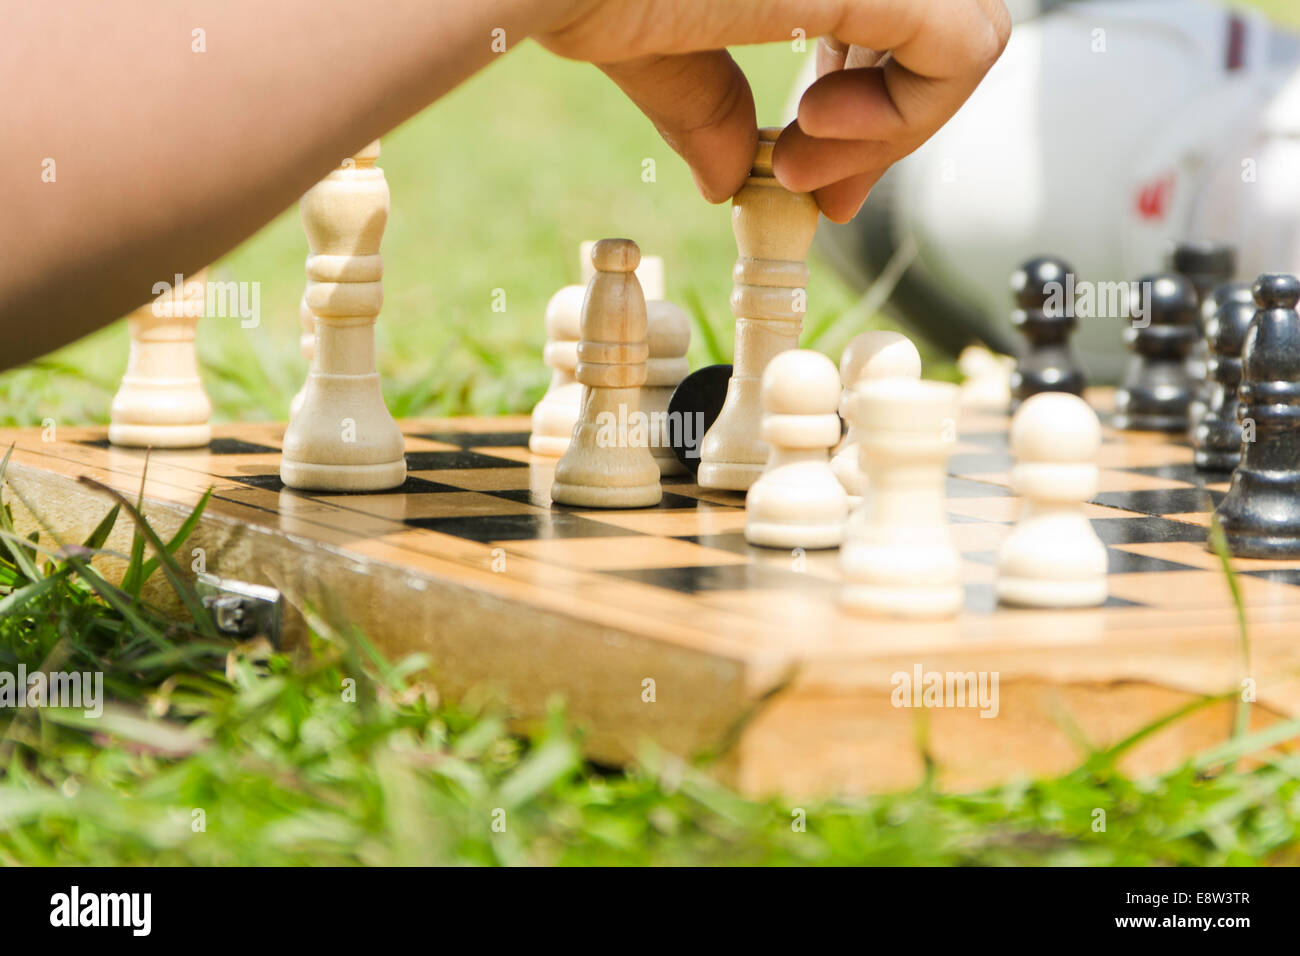 1 Indina Mann spielt Schach Stockfoto